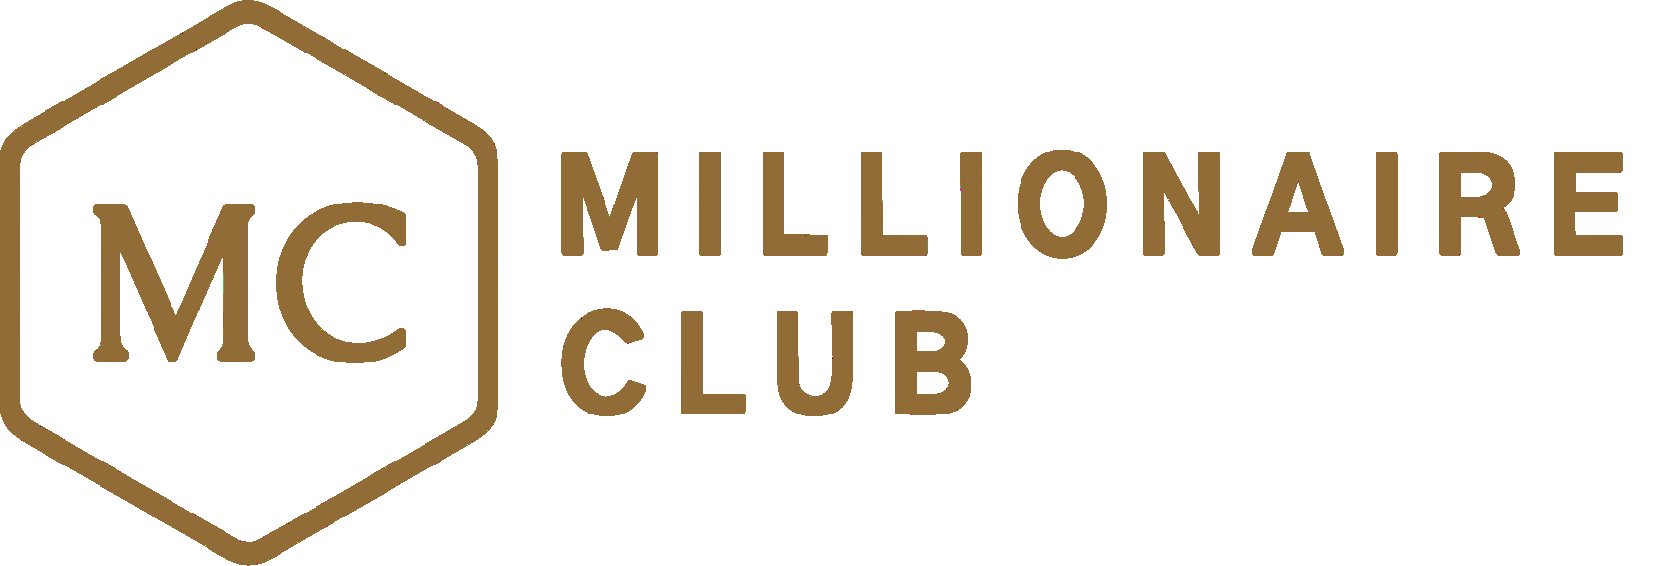 Millionaire club